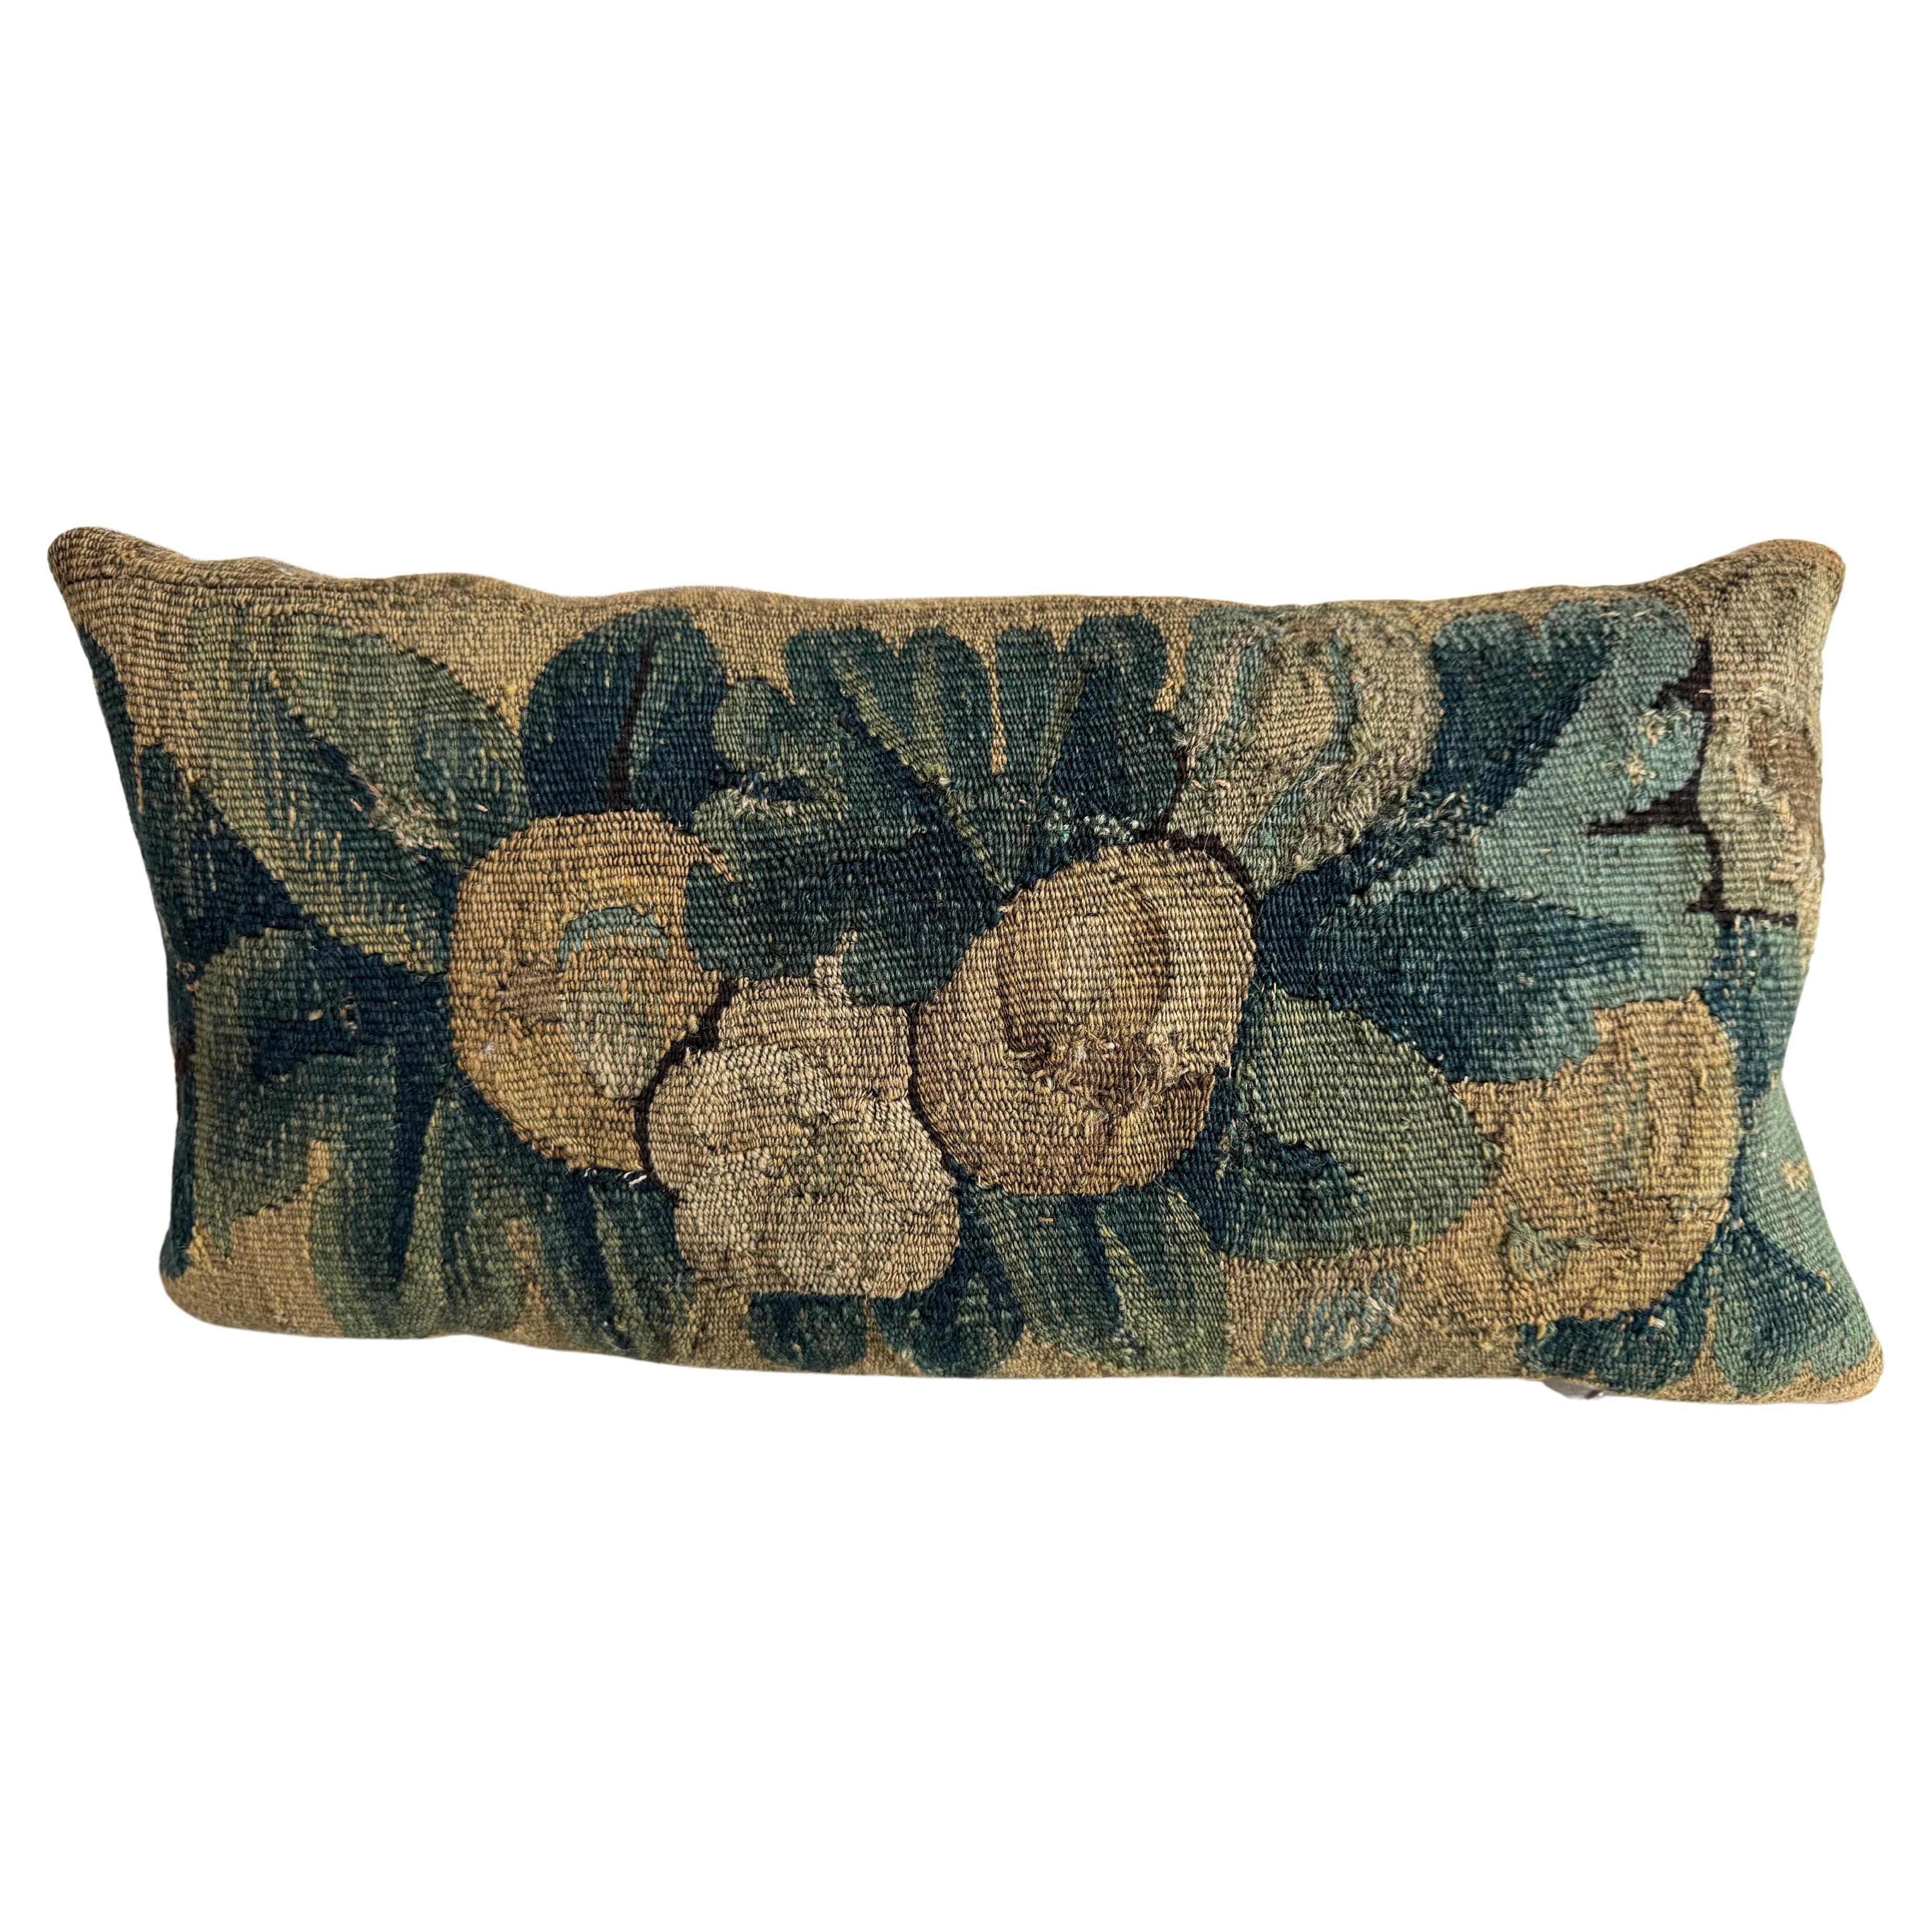 17th Century Flemish Pillow - 20" x 10" For Sale